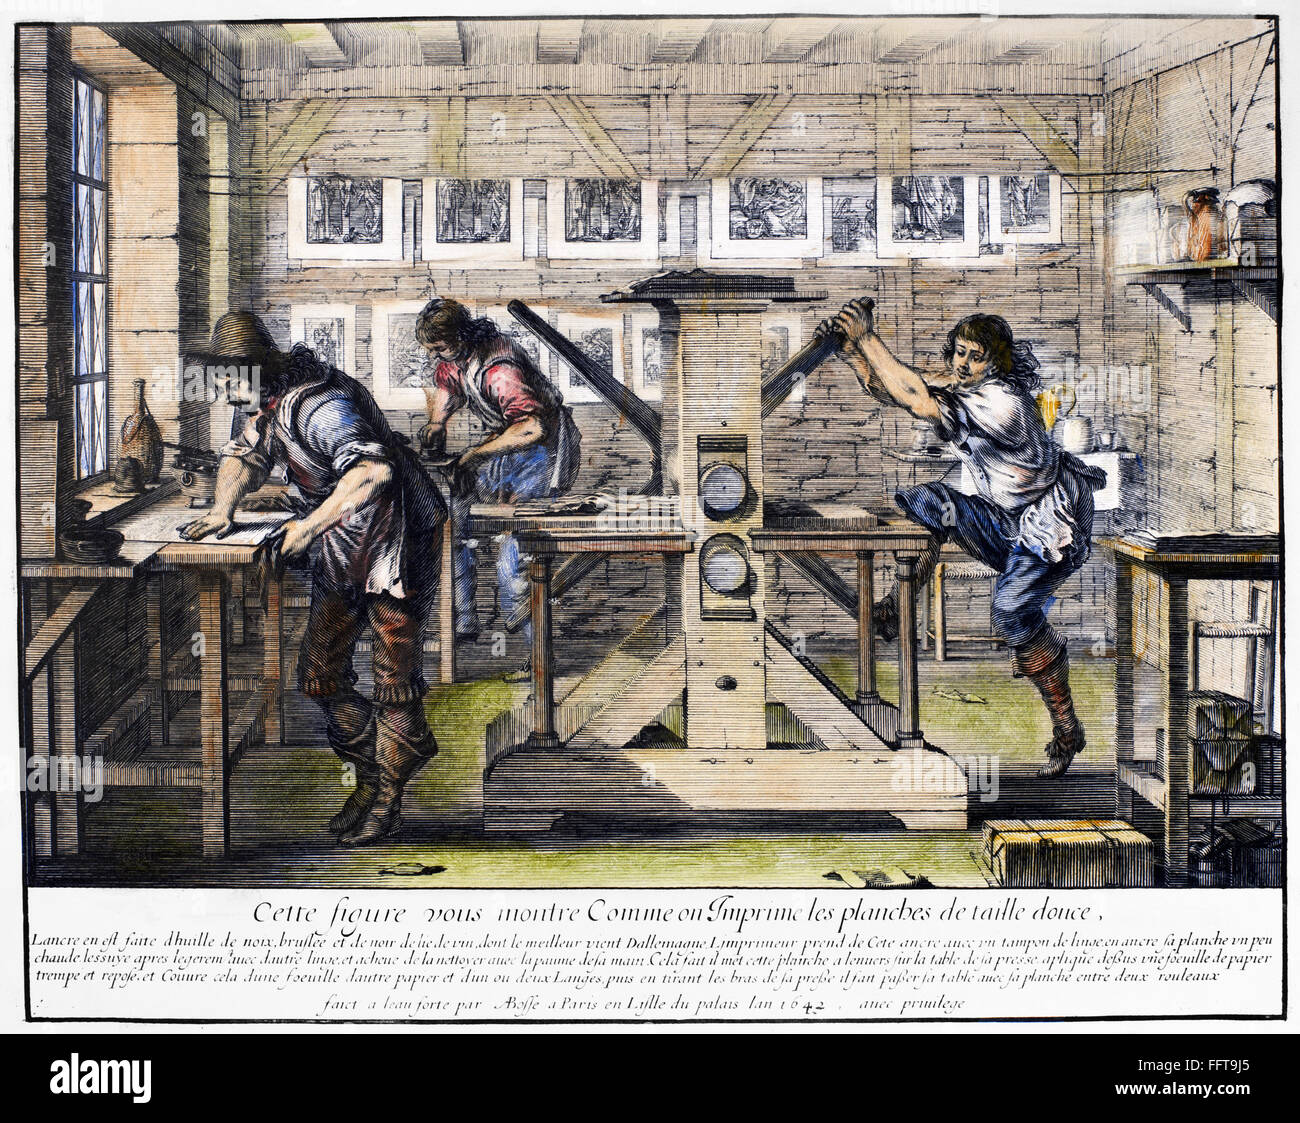 Stampa parigina SHOP, 1643. /Nil facendo di rame-piastra incisioni in un parigino di print shop. Incisione su rame, francese, 1643. Foto Stock